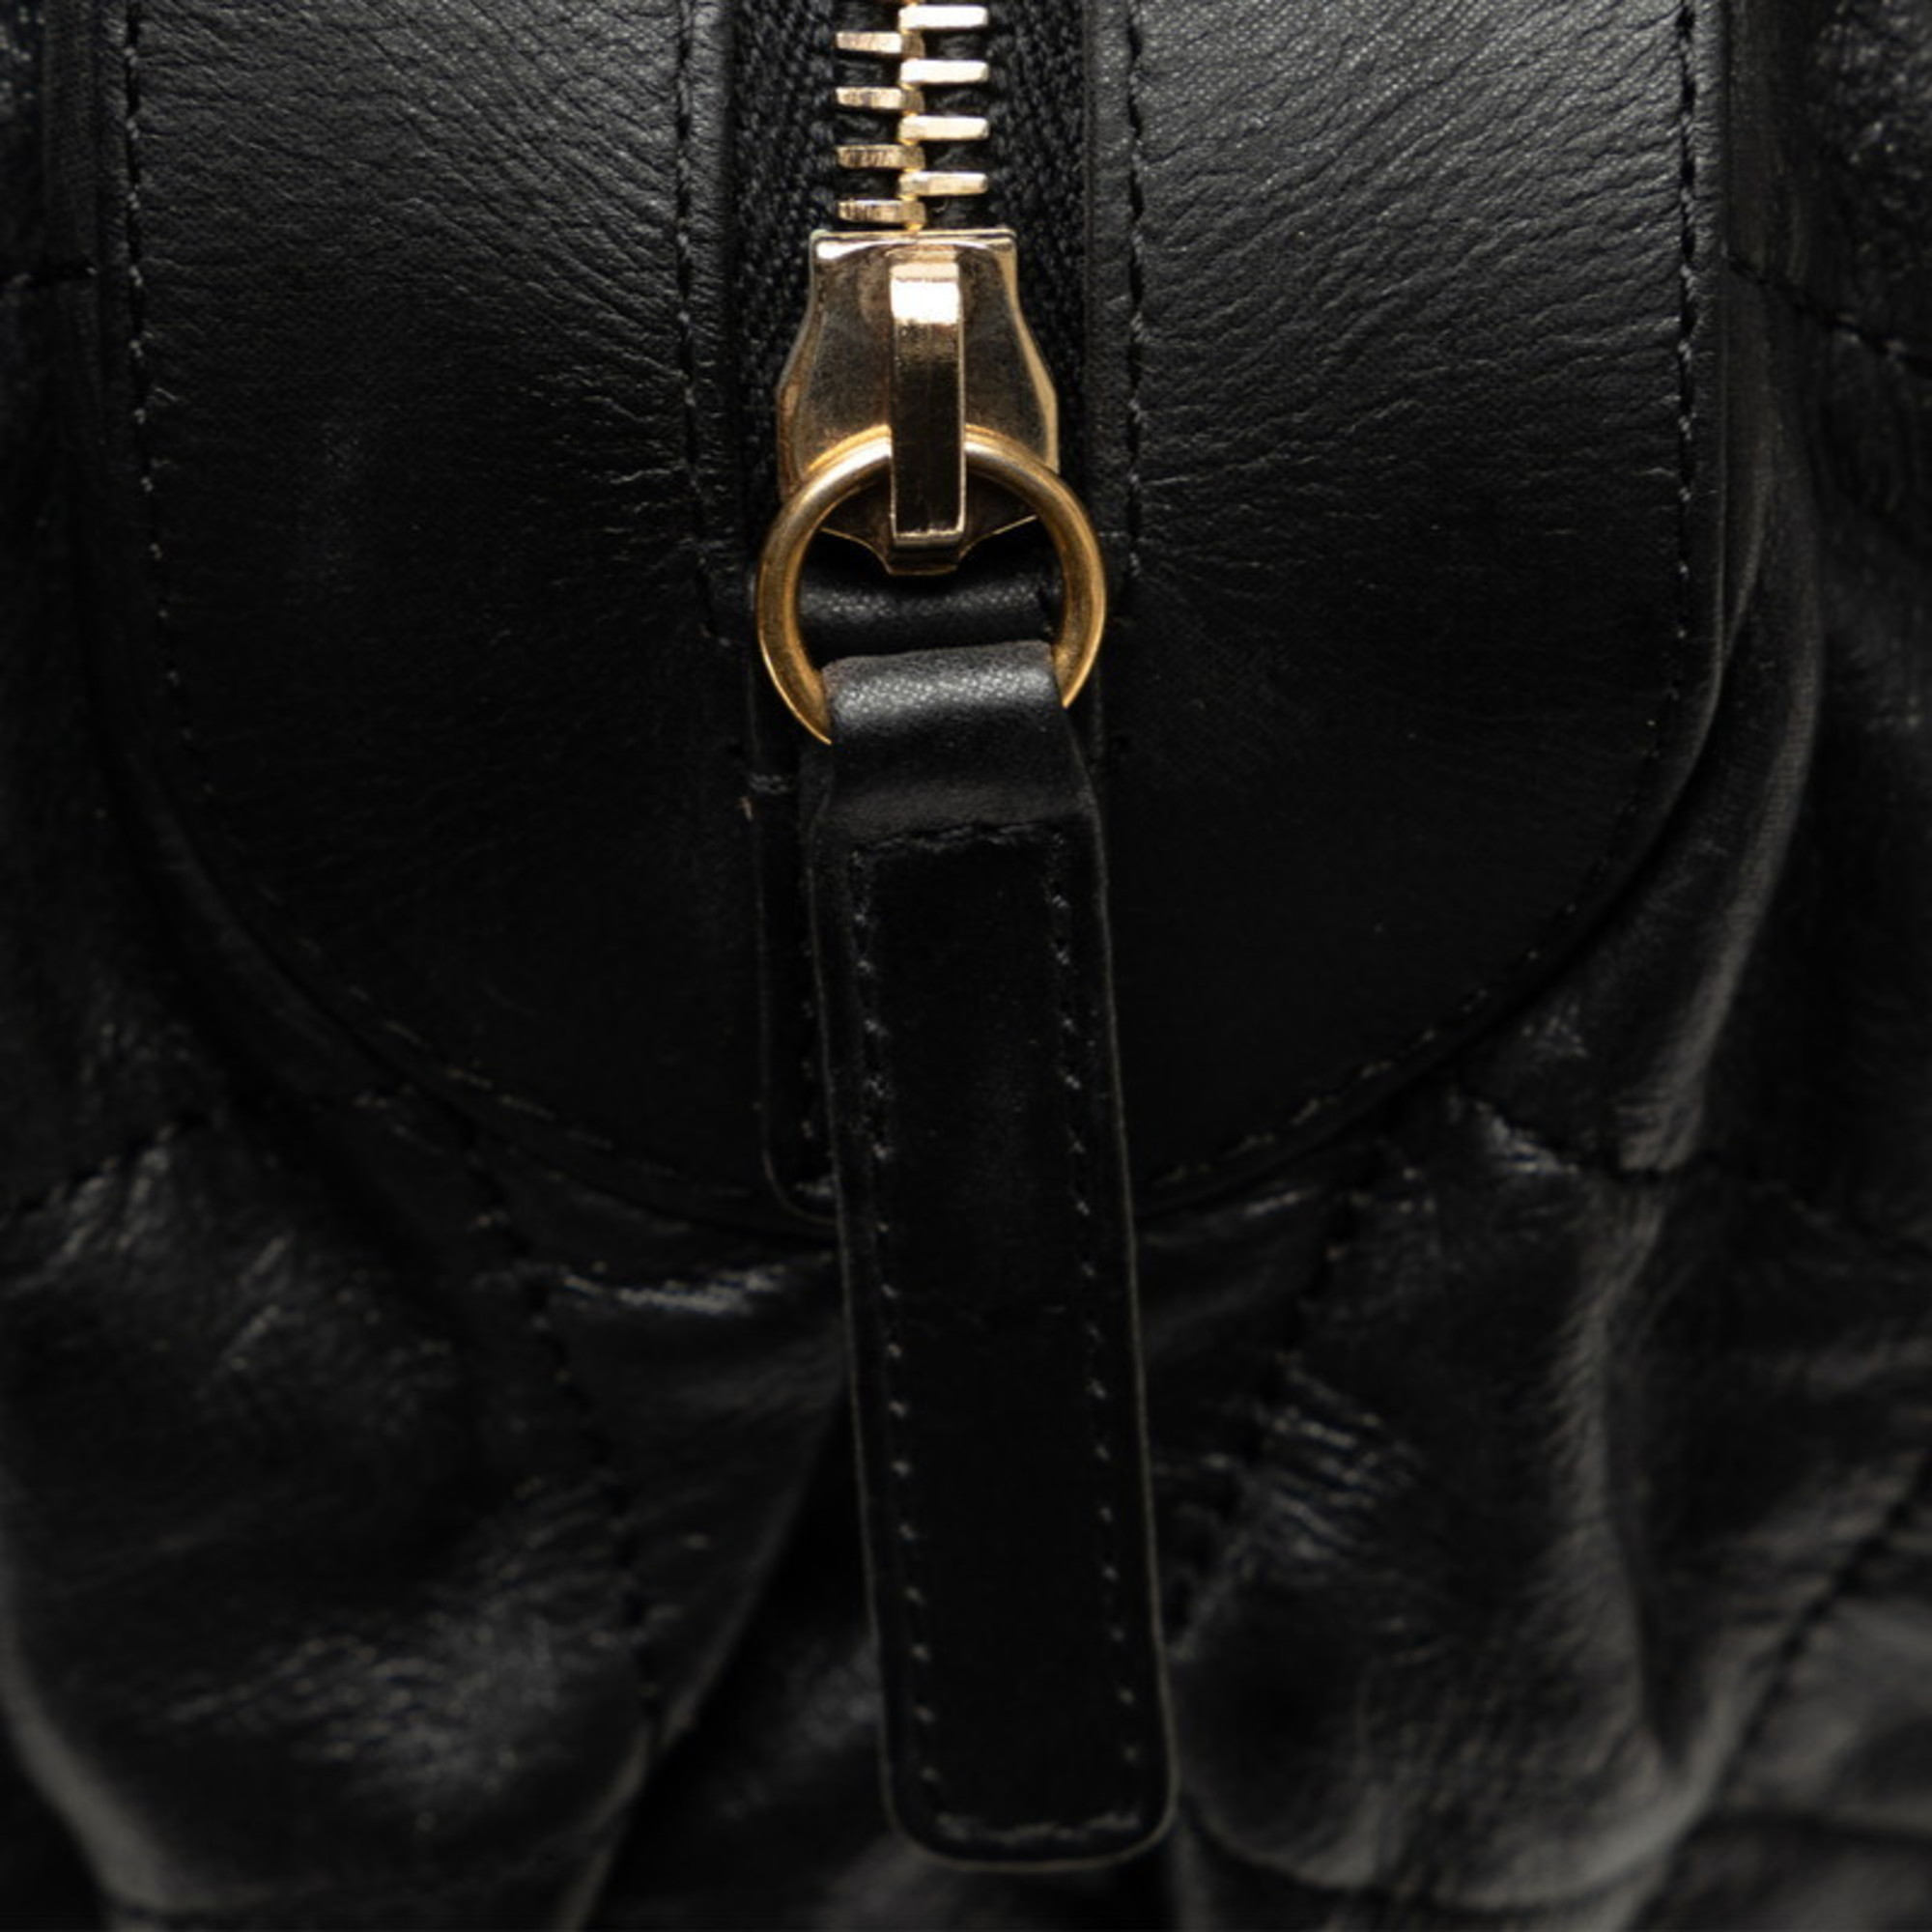 Chanel Coco Mark Matelasse Chain Shoulder Bag Black Gold Lambskin Women's CHANEL